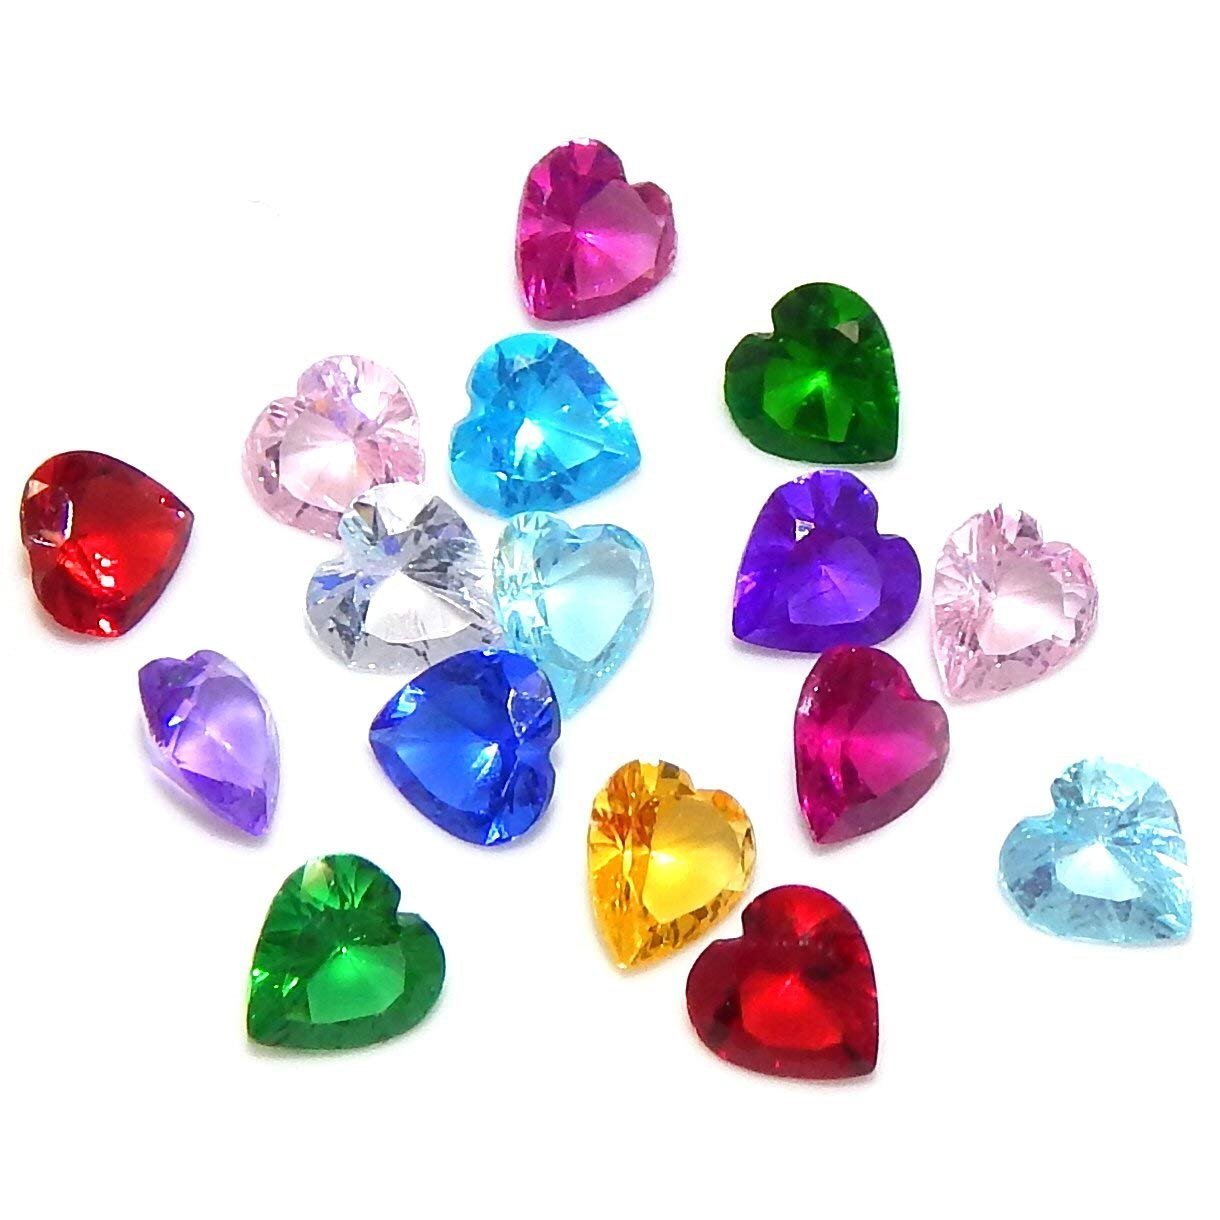 Memory Locket Charm - Birthstone Crystal Heart (October - Tourmaline) - The Little Jewellery Company